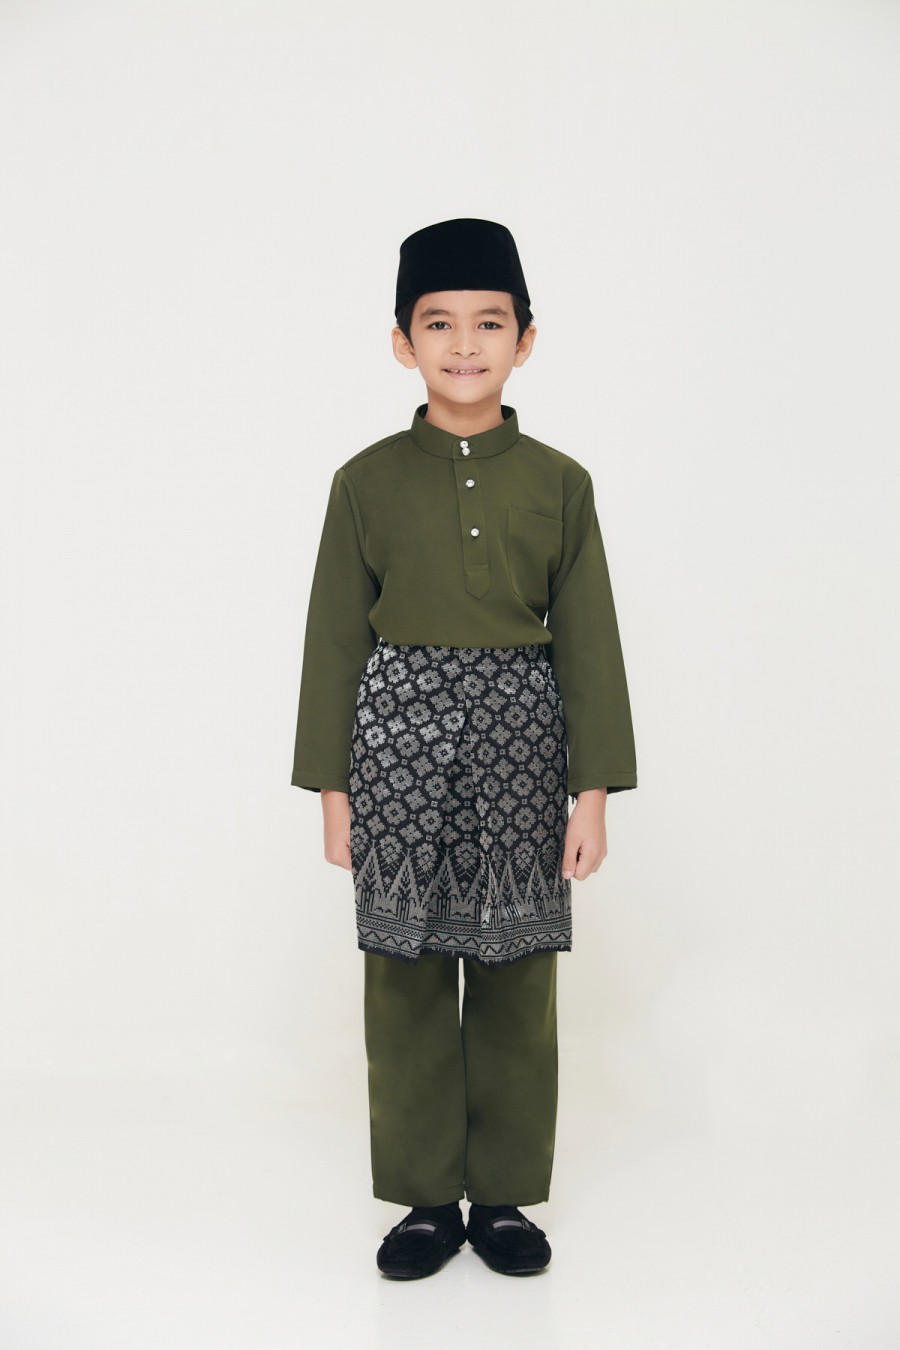 Baju Melayu Juma Kids In Army Green